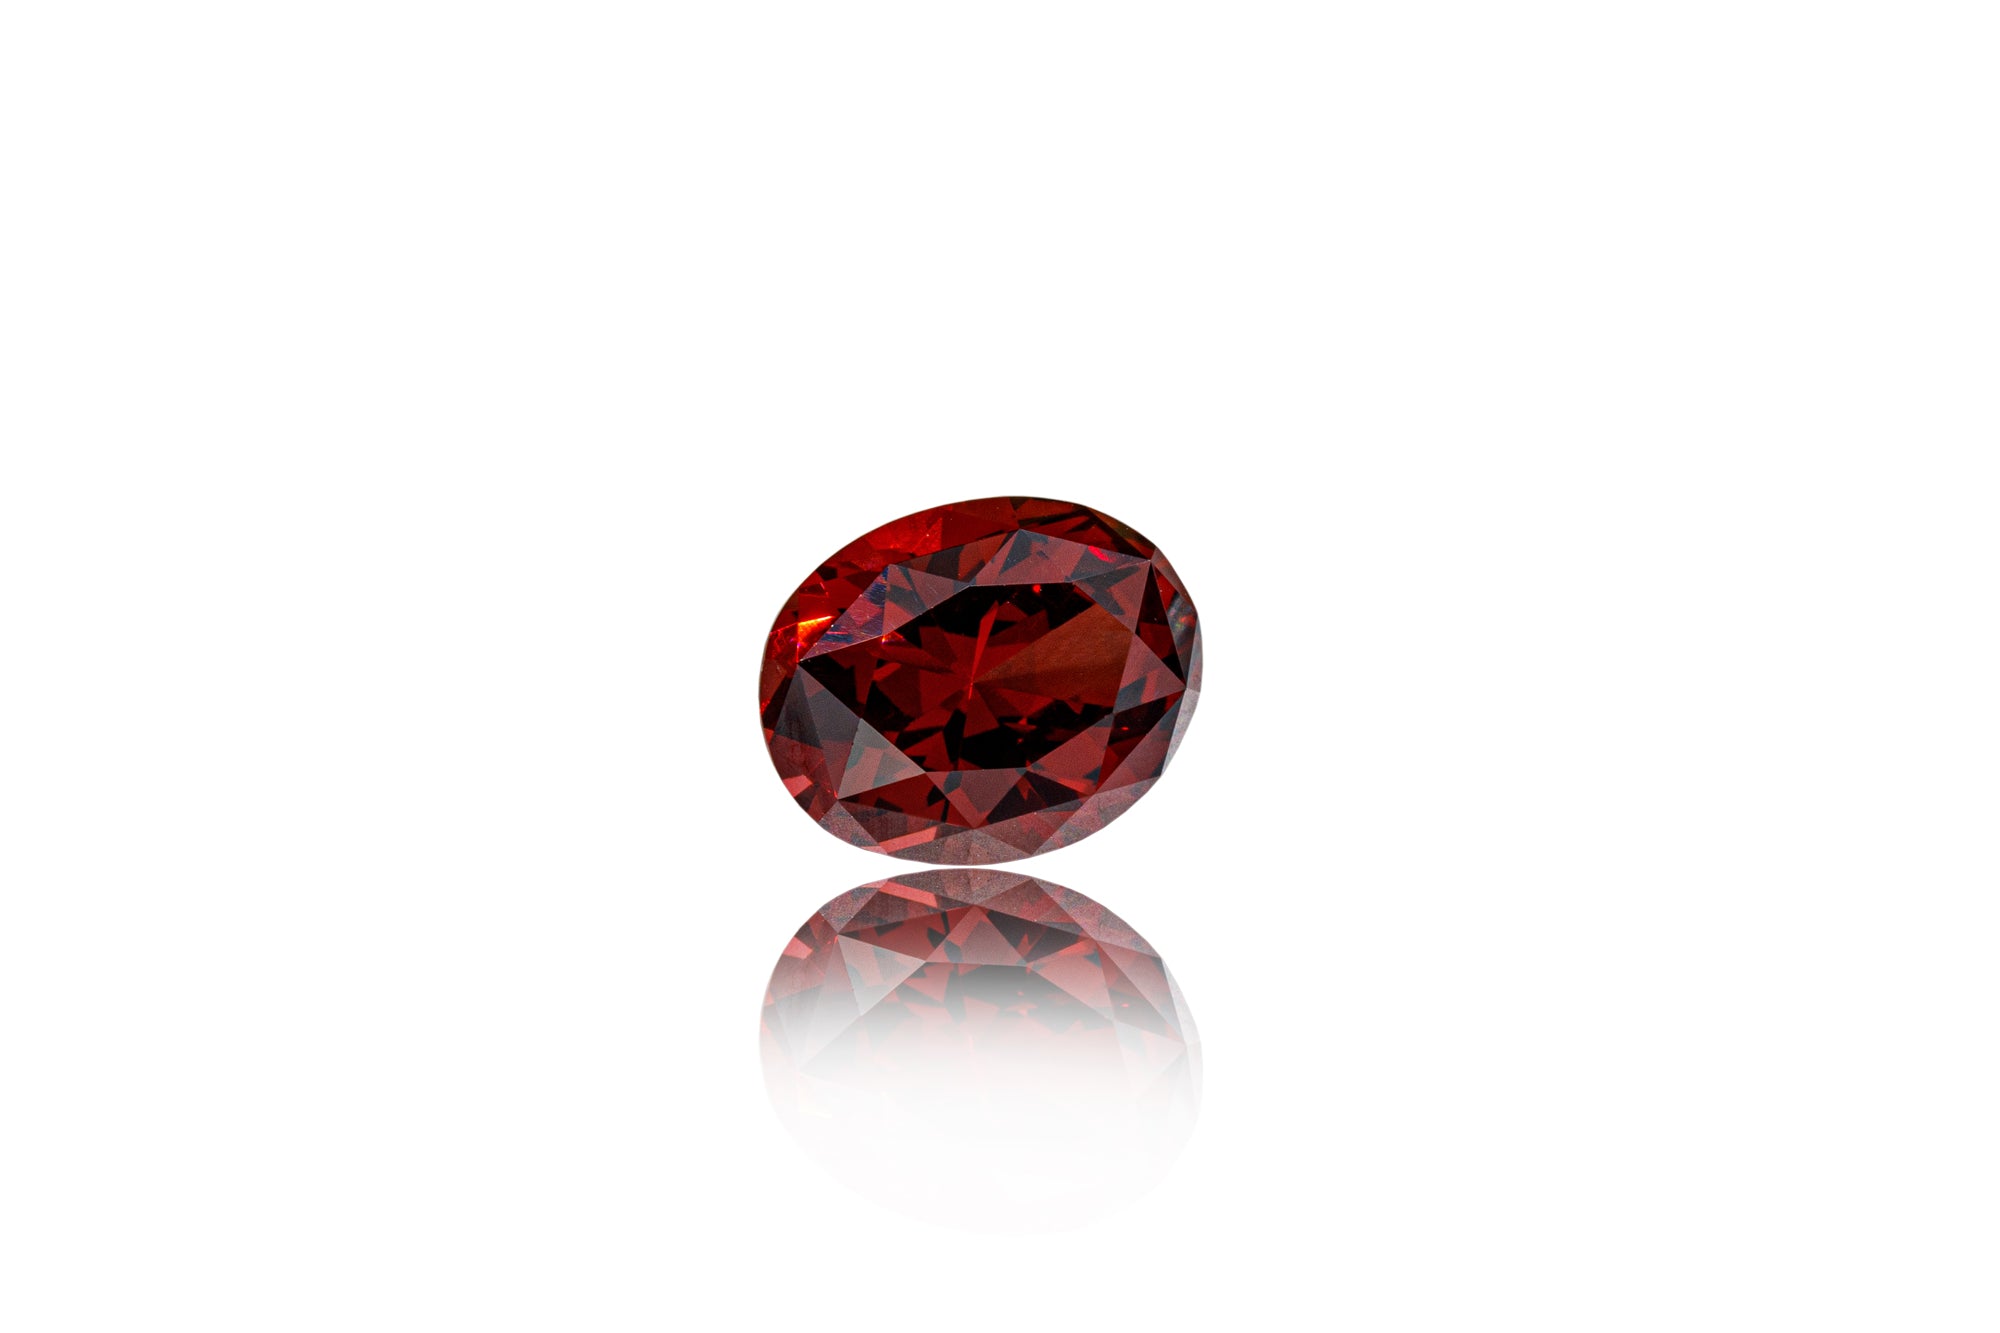 Red Garnet Stone - Excellent Cut January Birthstone USA - Gem Stone